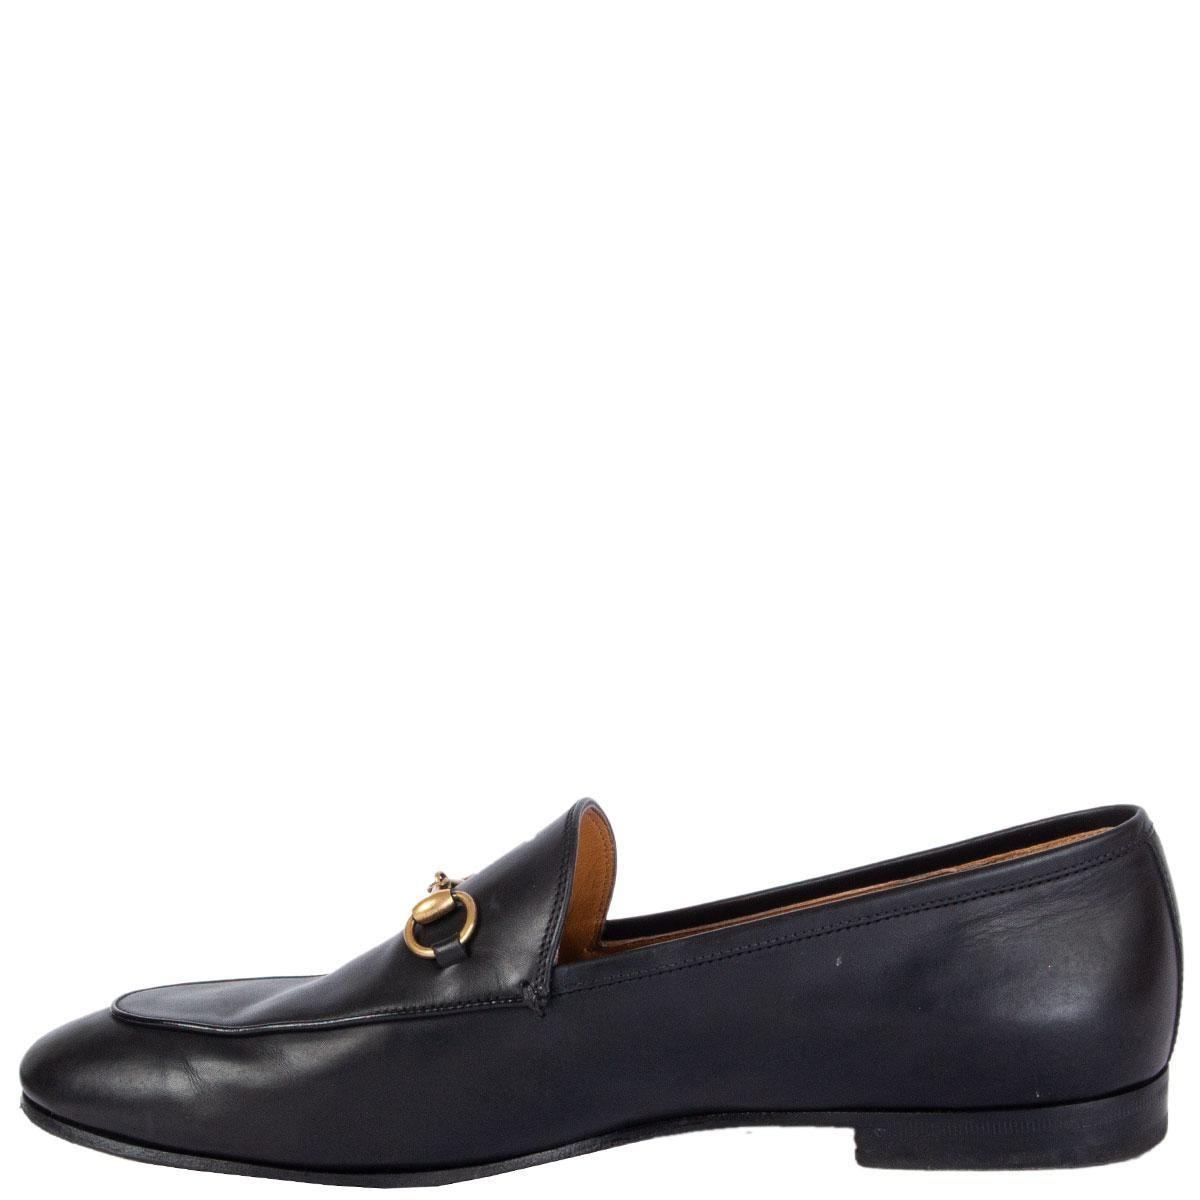 Black GUCCI black leather JORDAAN Horsebit Loafers Flats Shoes 42